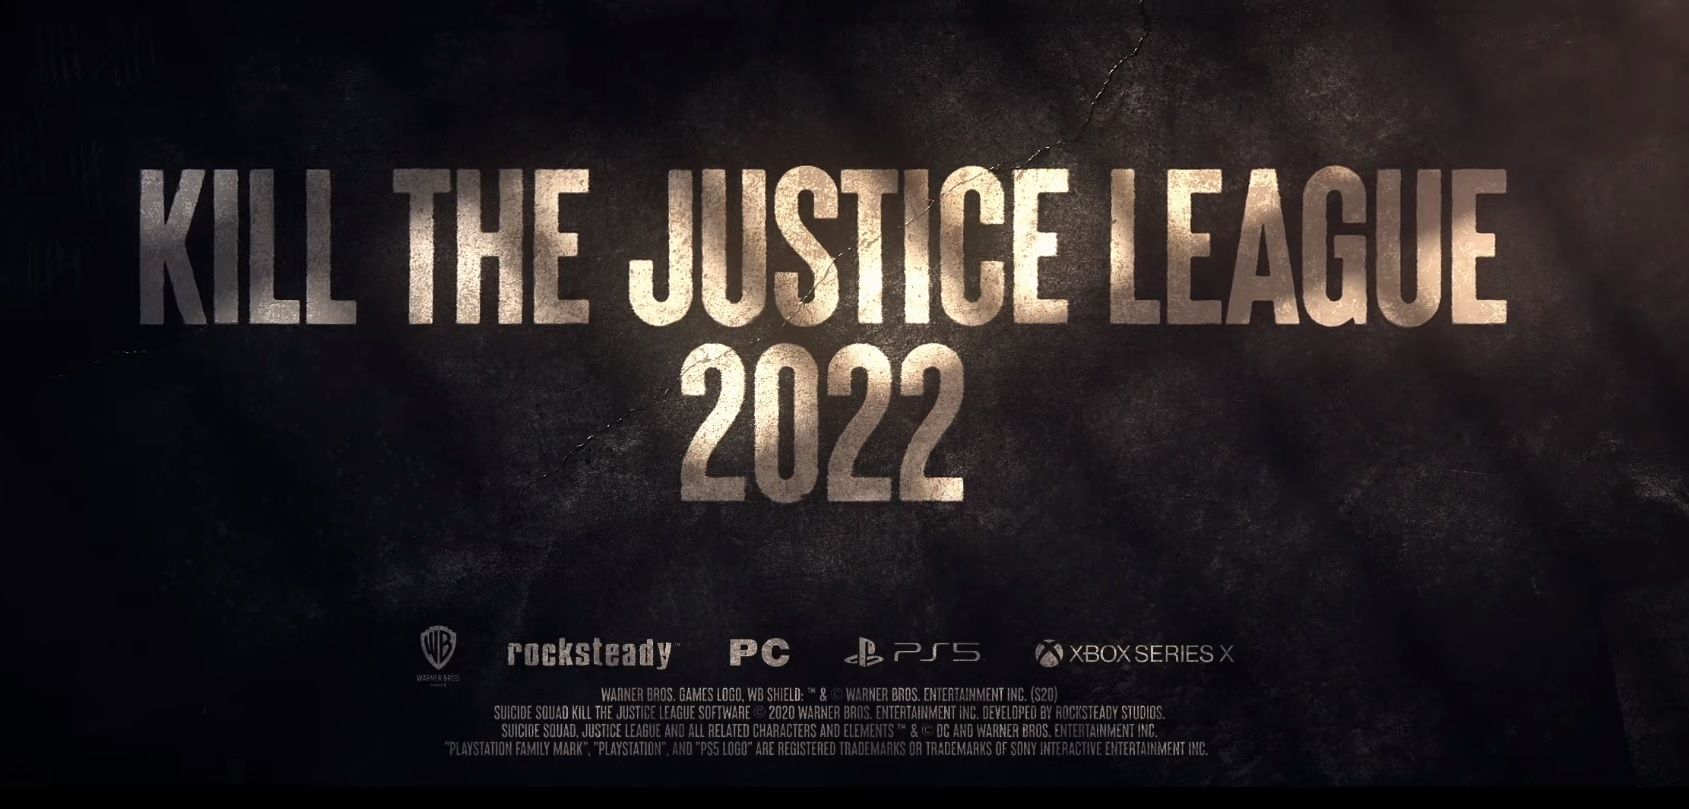 Suicide Squad: Kill The Justice League: PS5 vs Xbox Series X